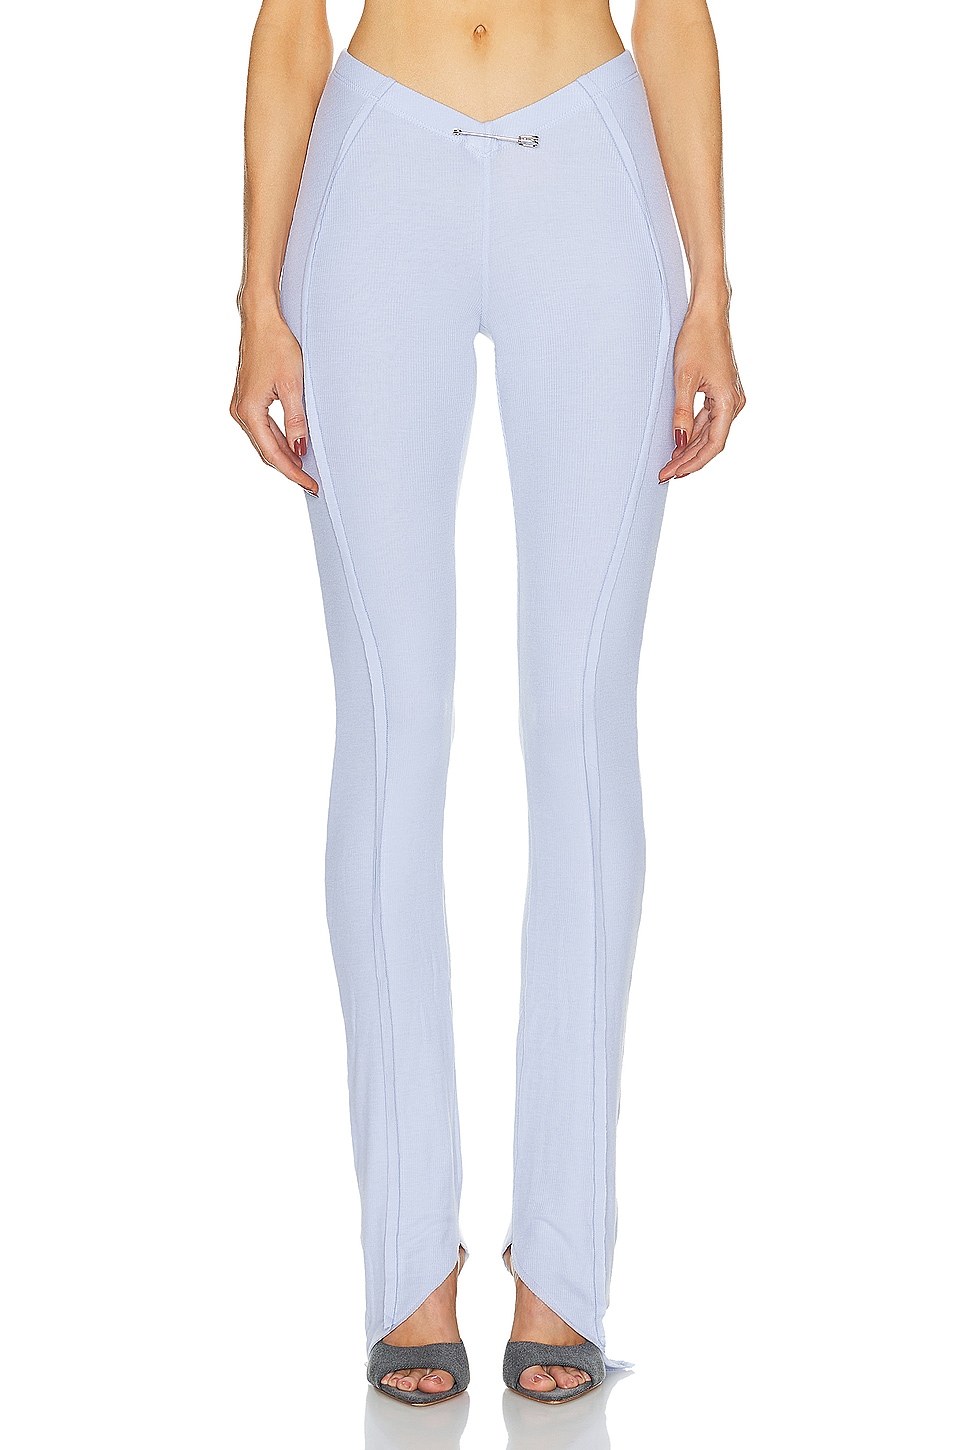 Image 1 of SAMI MIRO VINTAGE Asymmetric Pants in Blue Lace